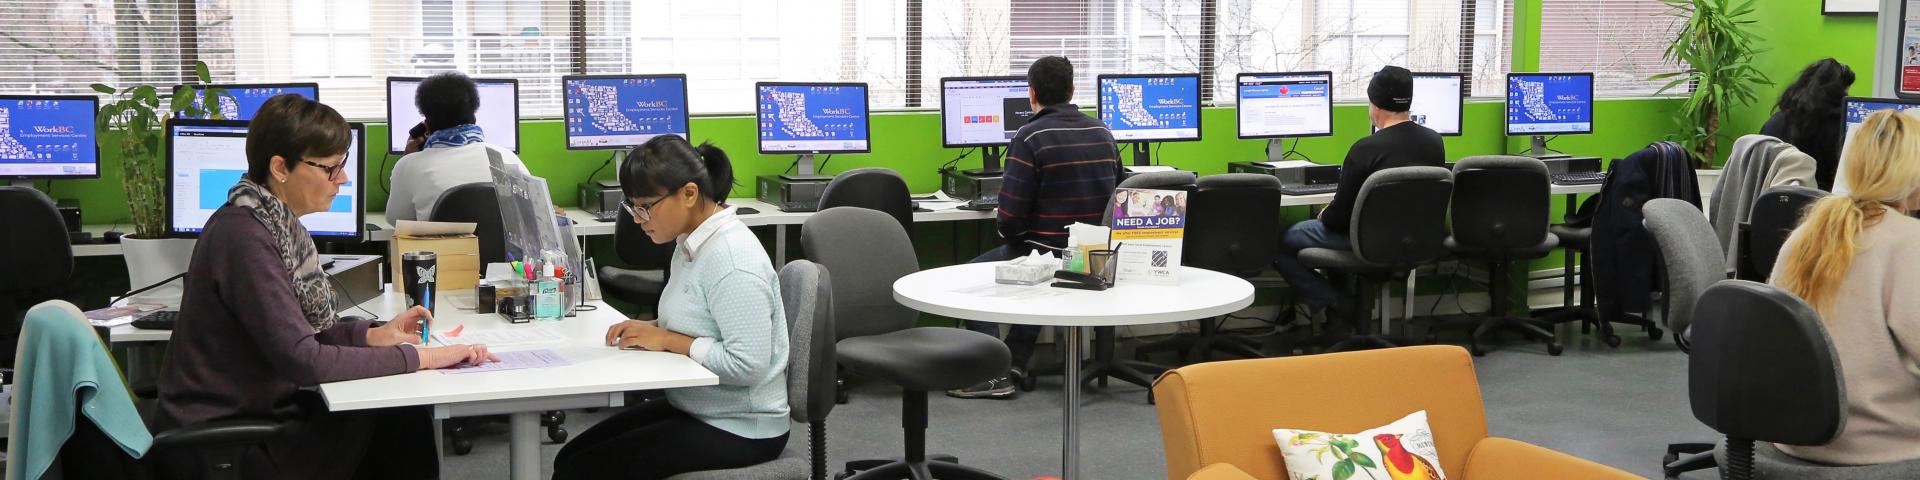 WorkBC Centre clients on computers